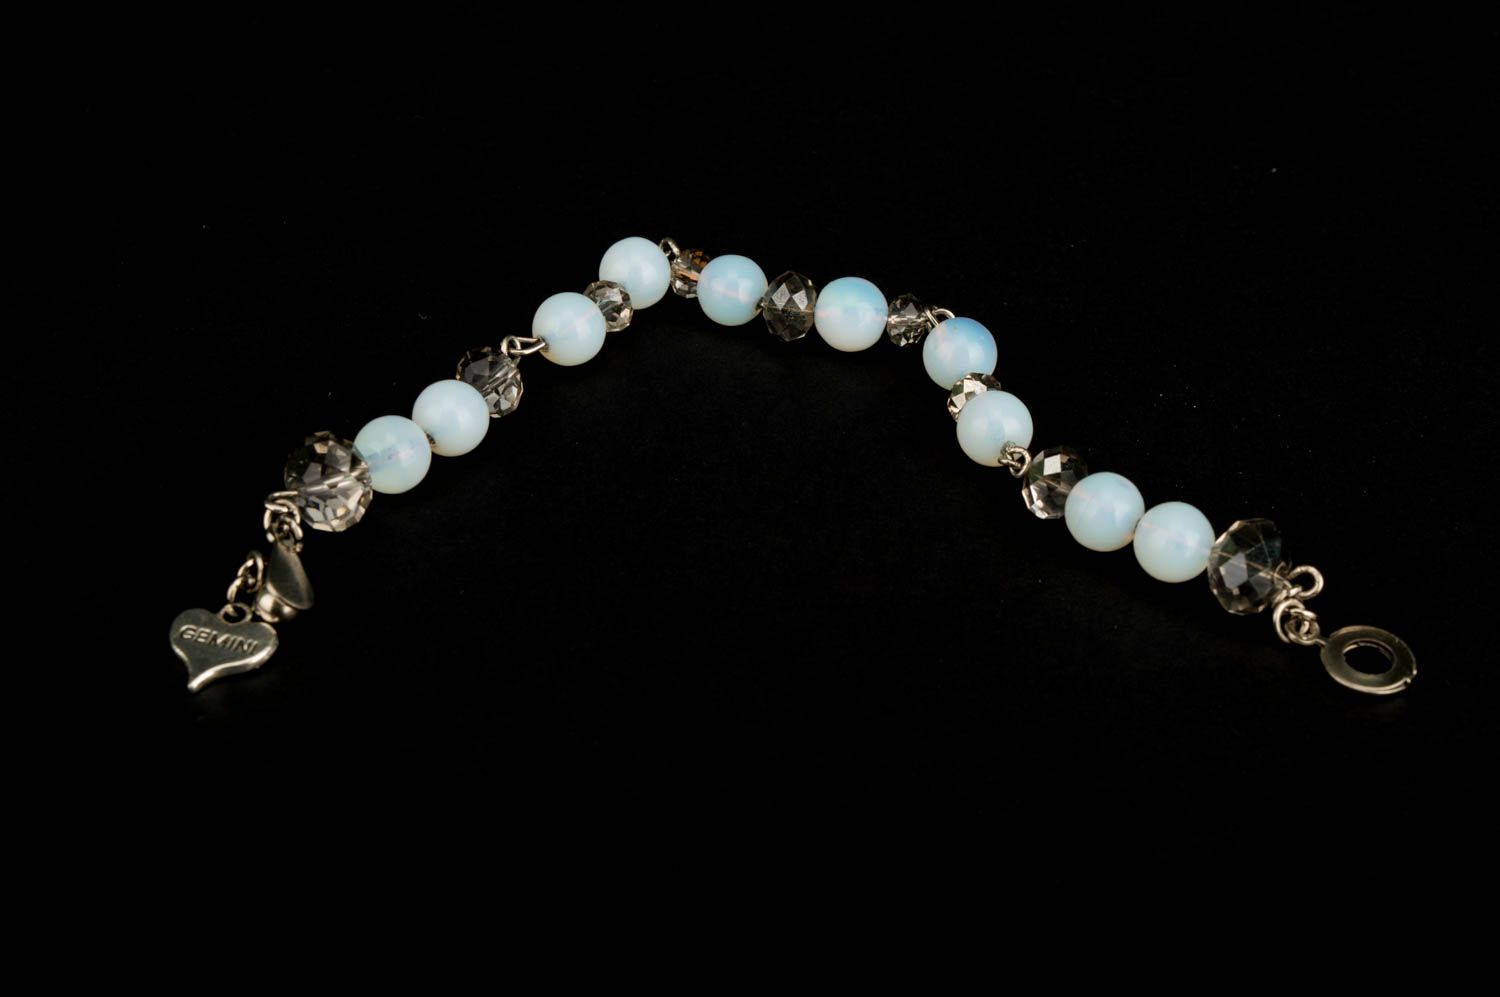 Transparent beads adjustable bracelet with heart shape charm for women photo 2